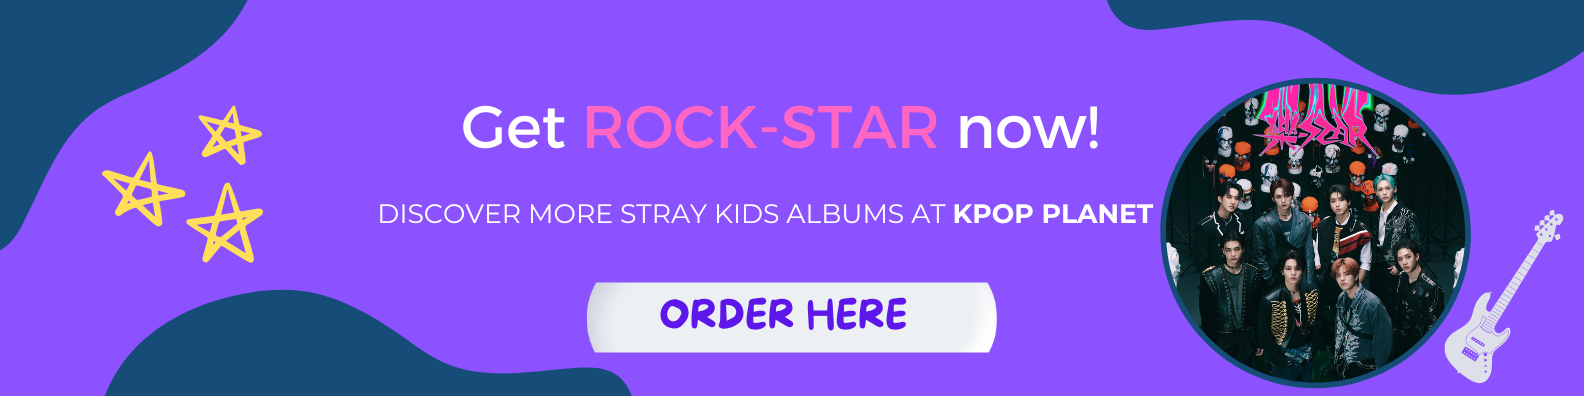 Stray Kids ROCK-STAR